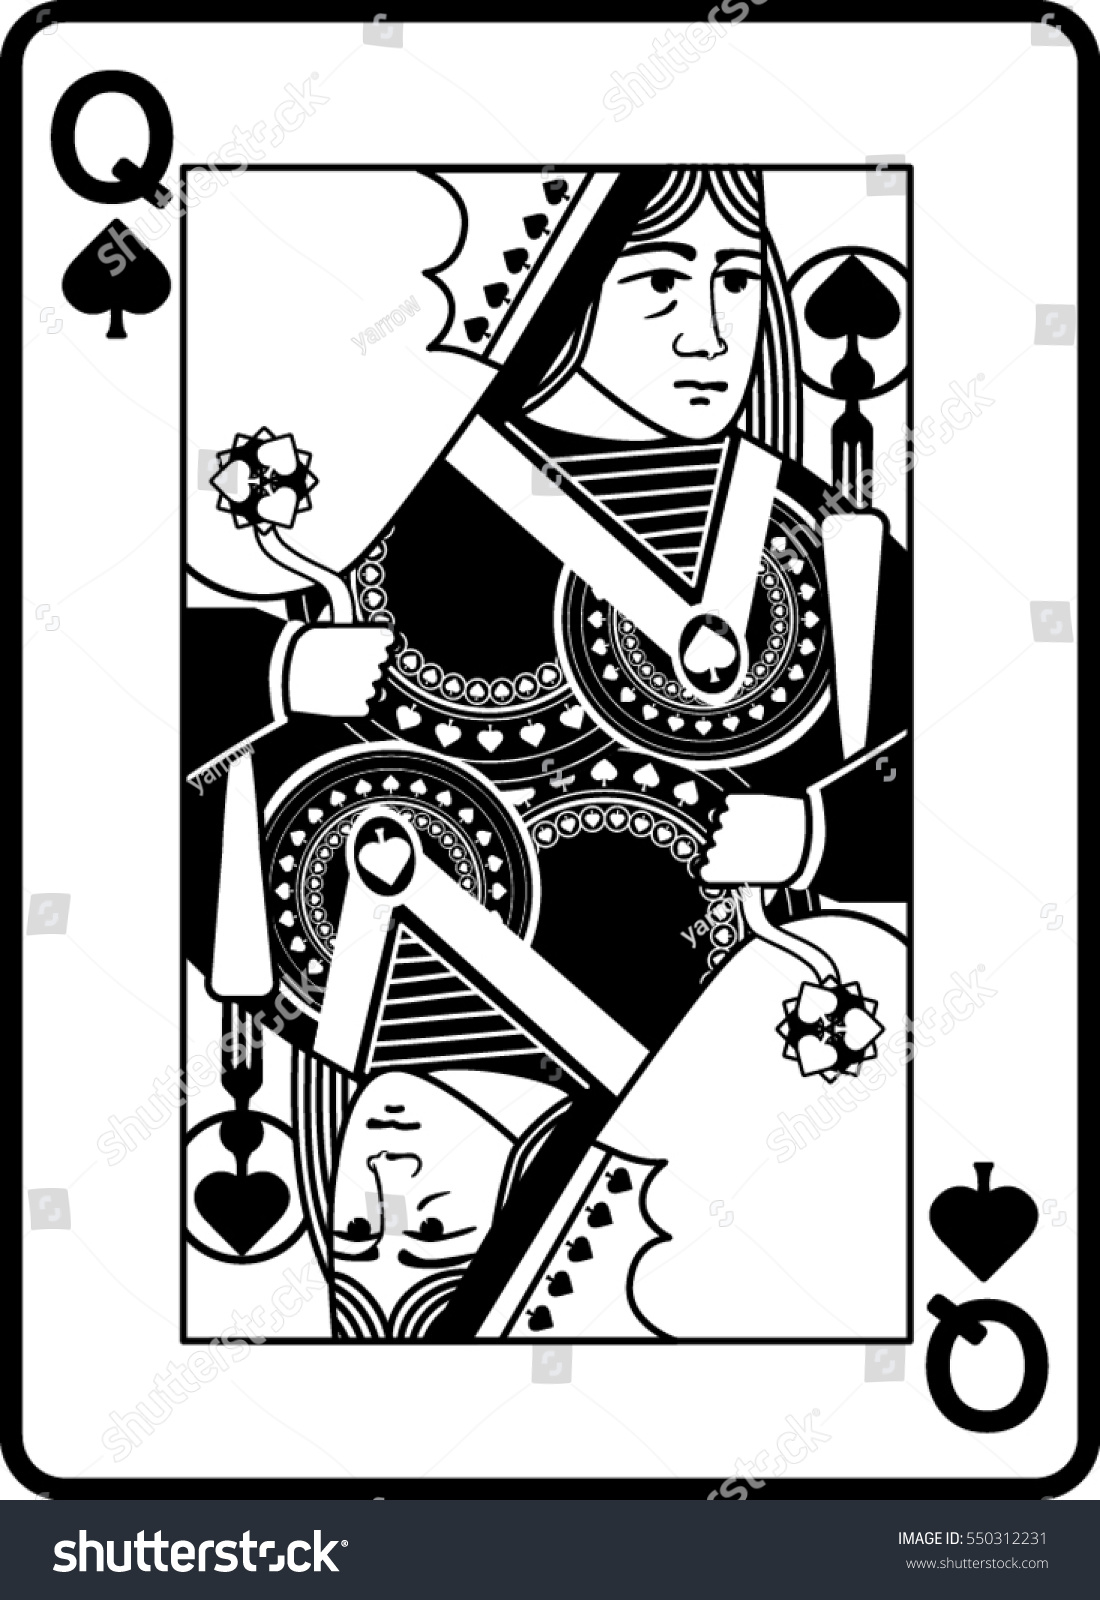 6,646 Queen of spades card Stock Vectors, Images & Vector Art ...